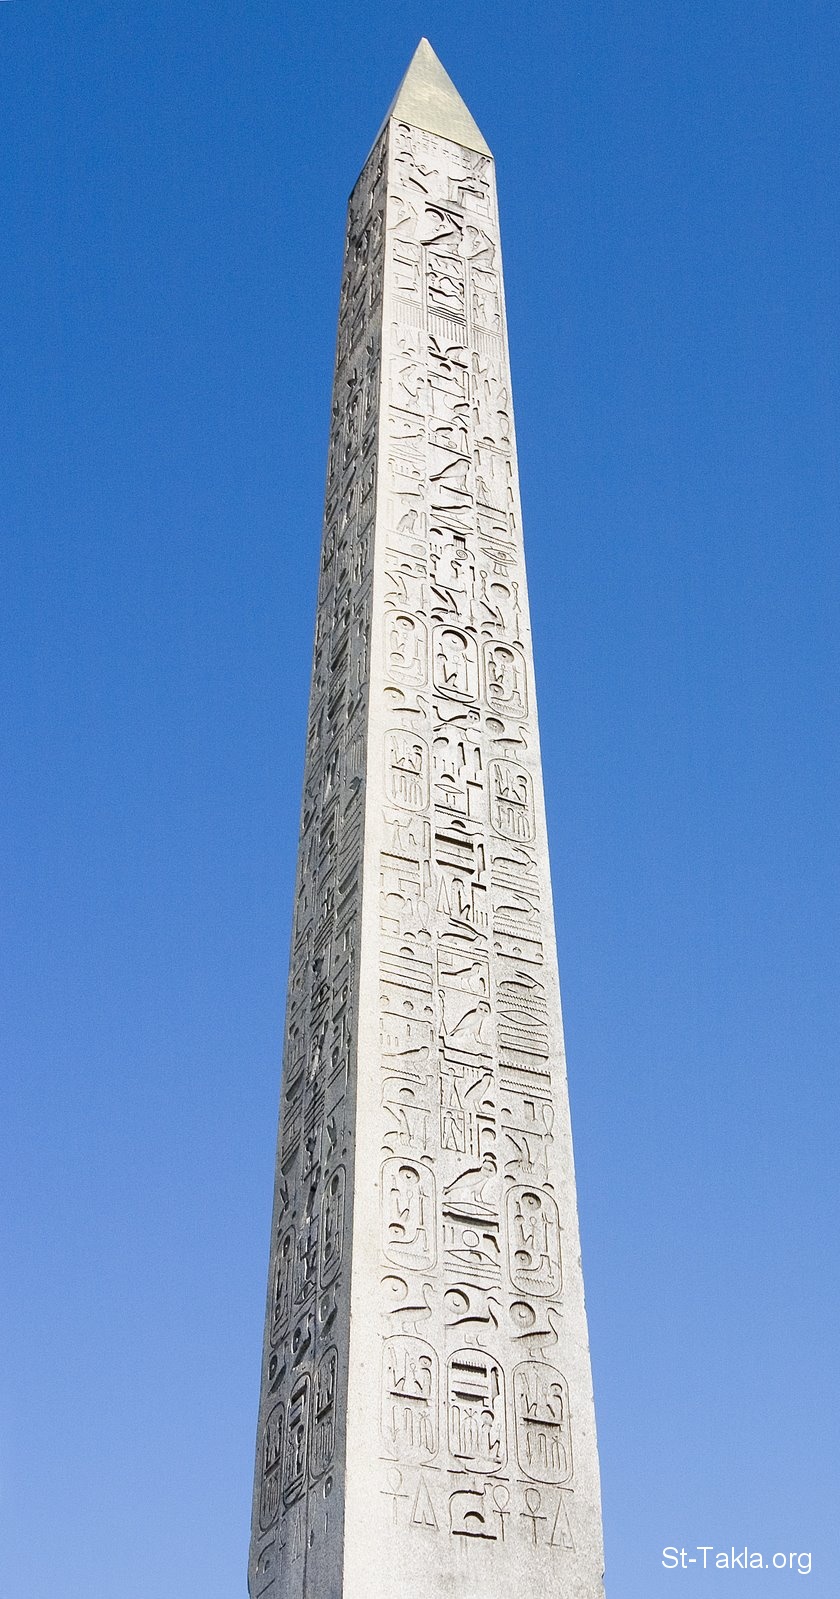 St-Takla.org Image: Egyptian Obelisk, needle     :  